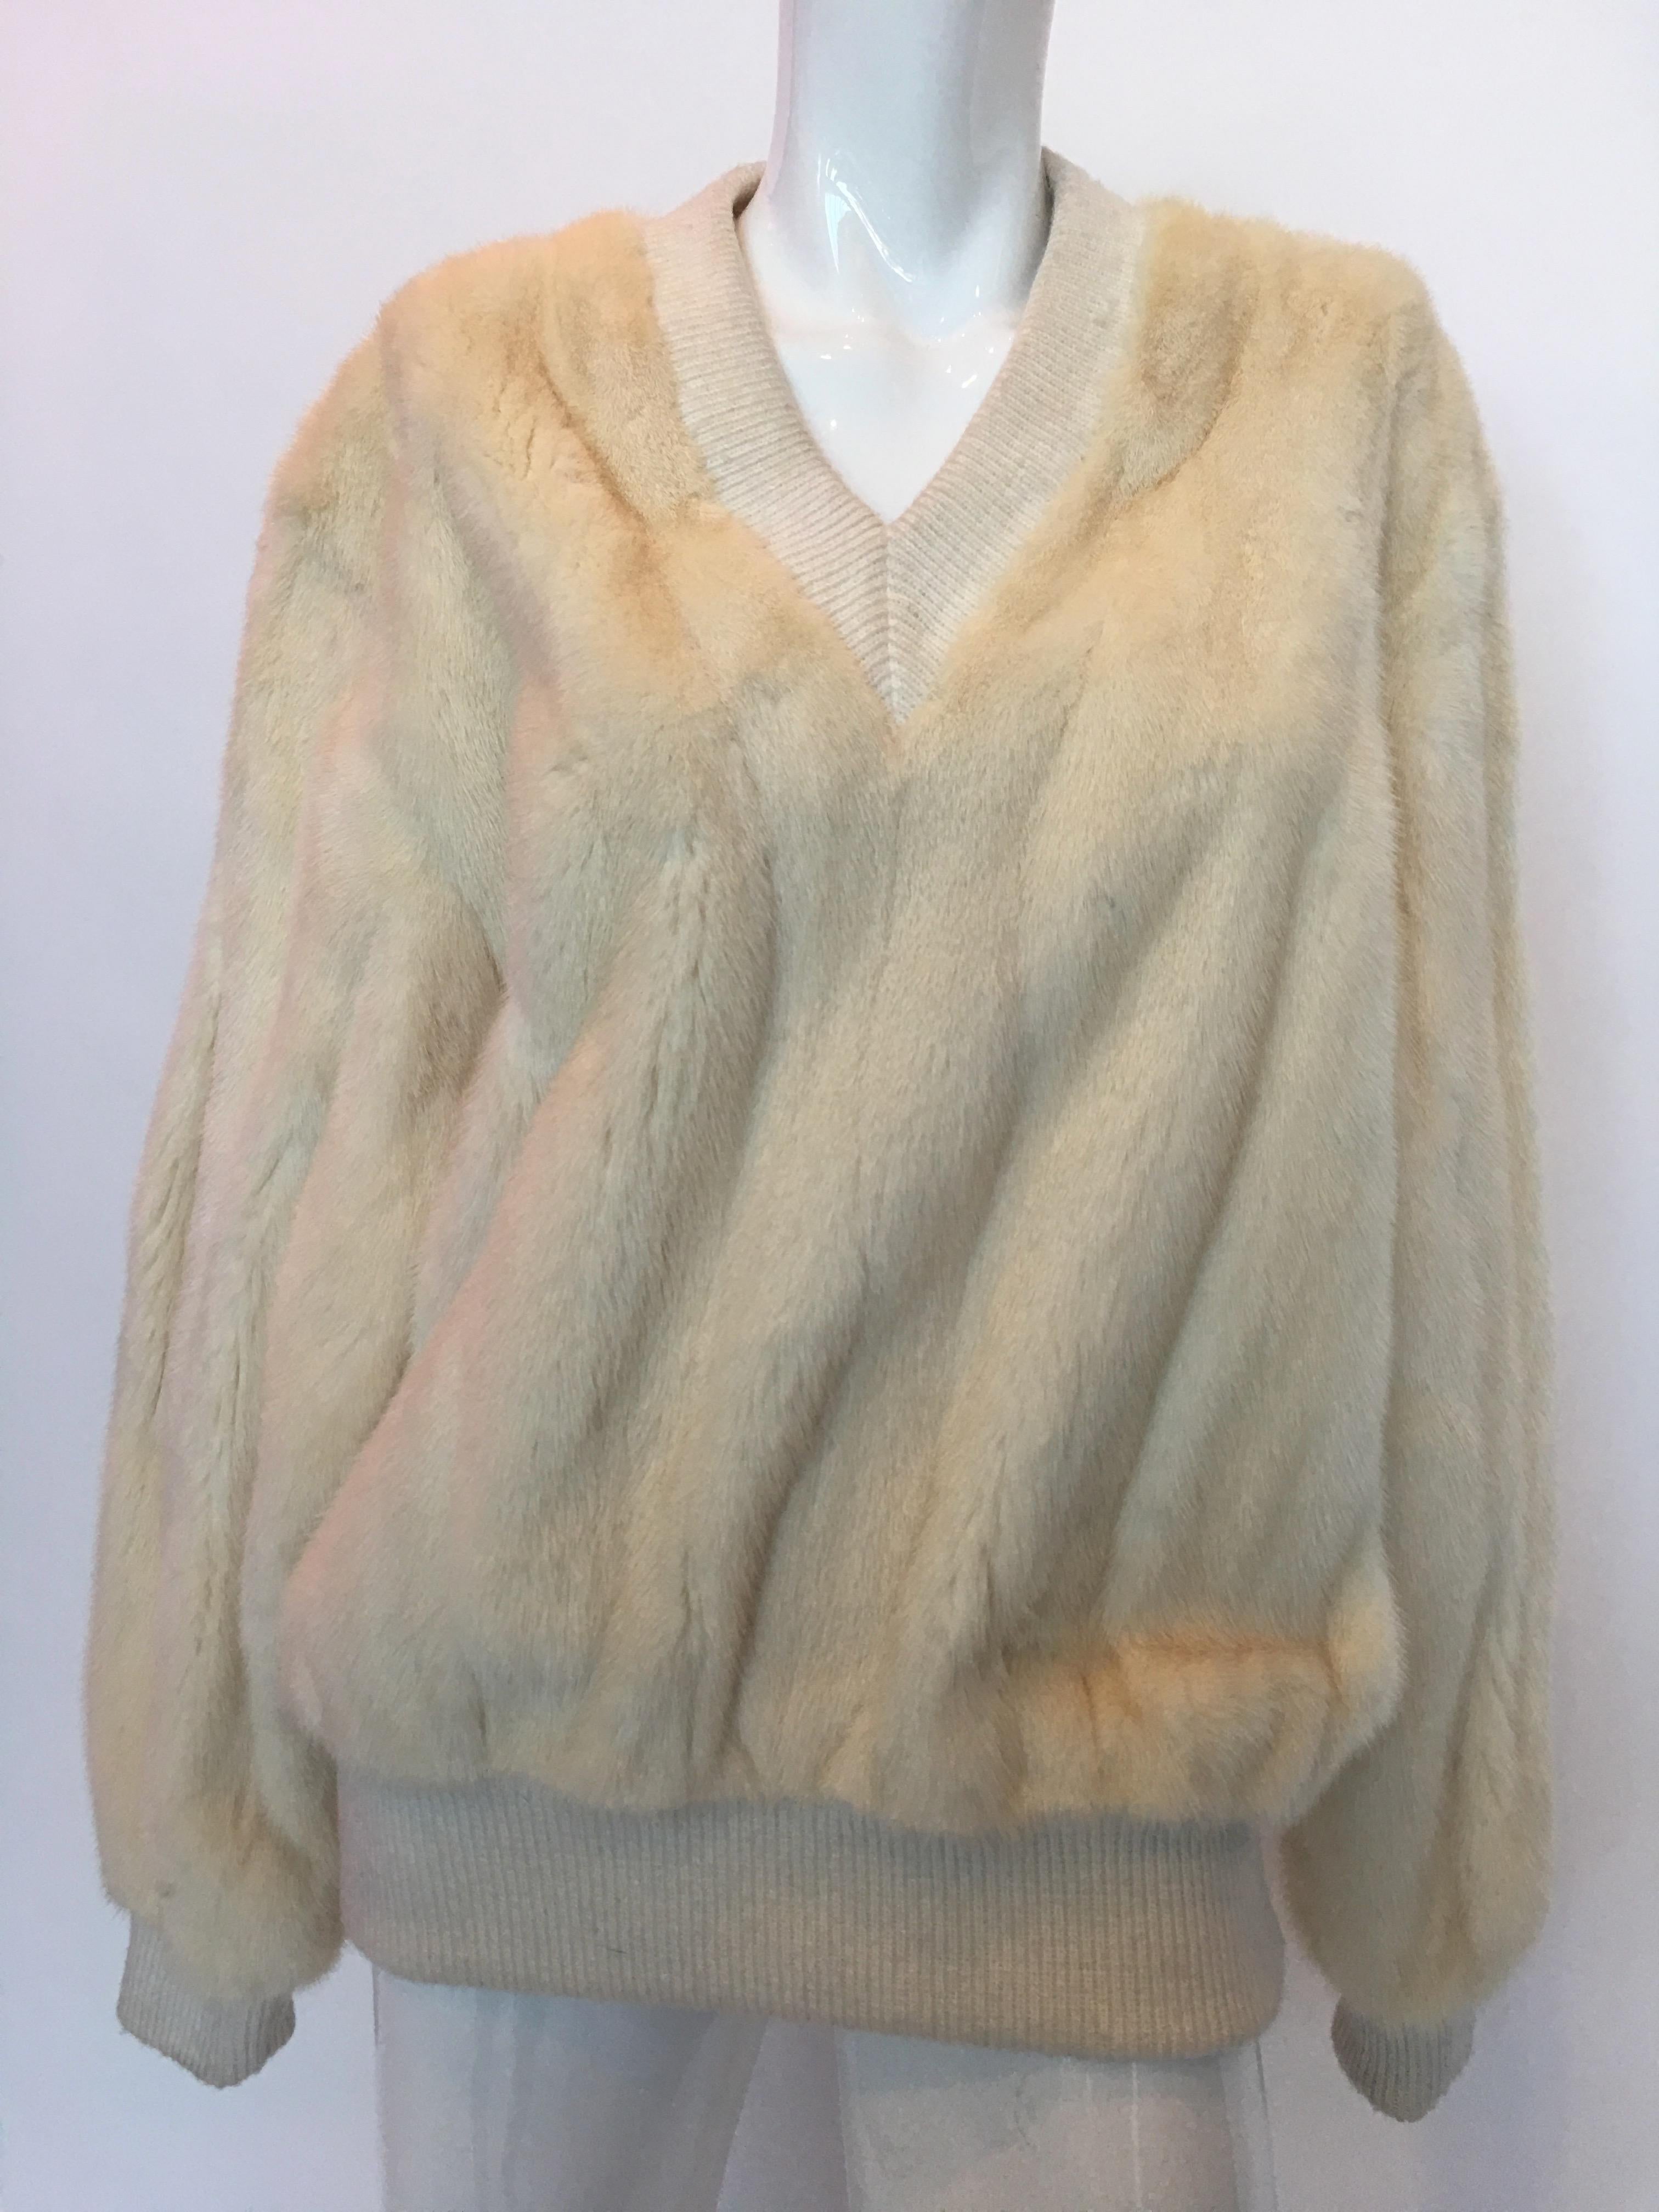 Mr Blackwell 1960's White Mink V Neck Sweater

Shoulders - seam to seam: 20